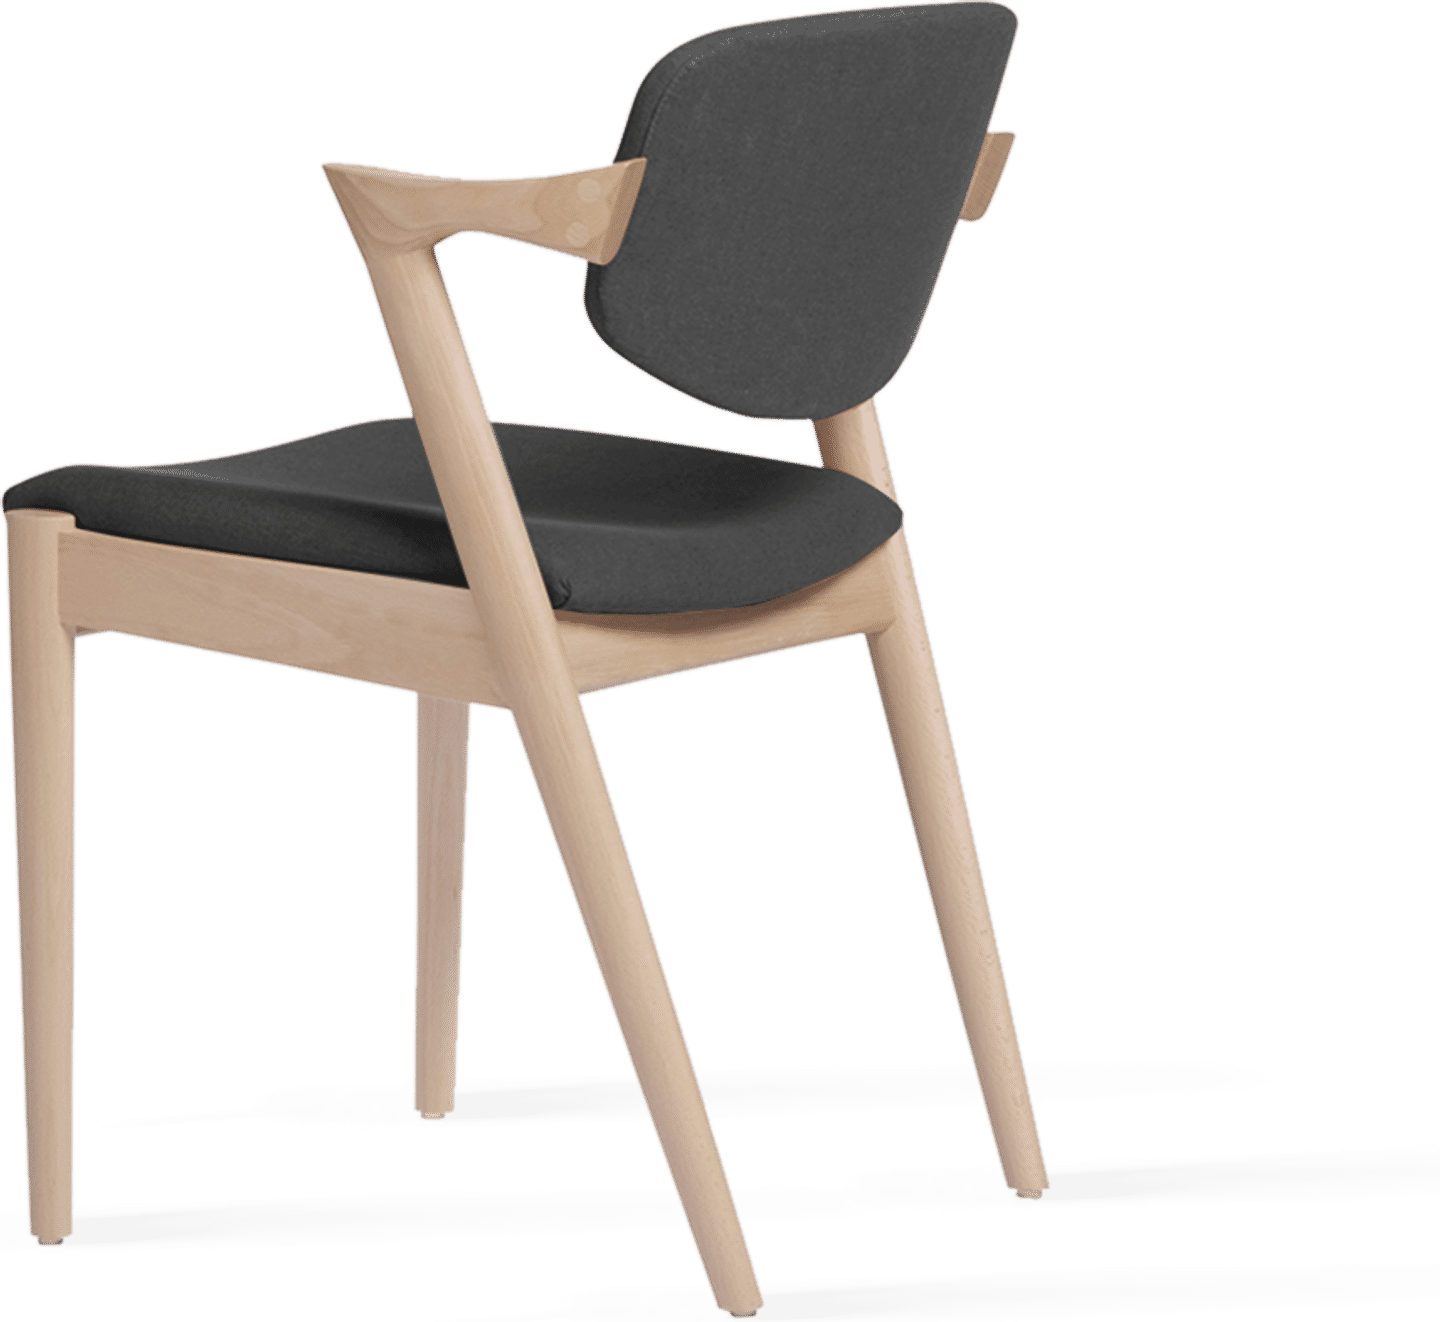 No. 42 Chair Ash/Charcoal Grey image.